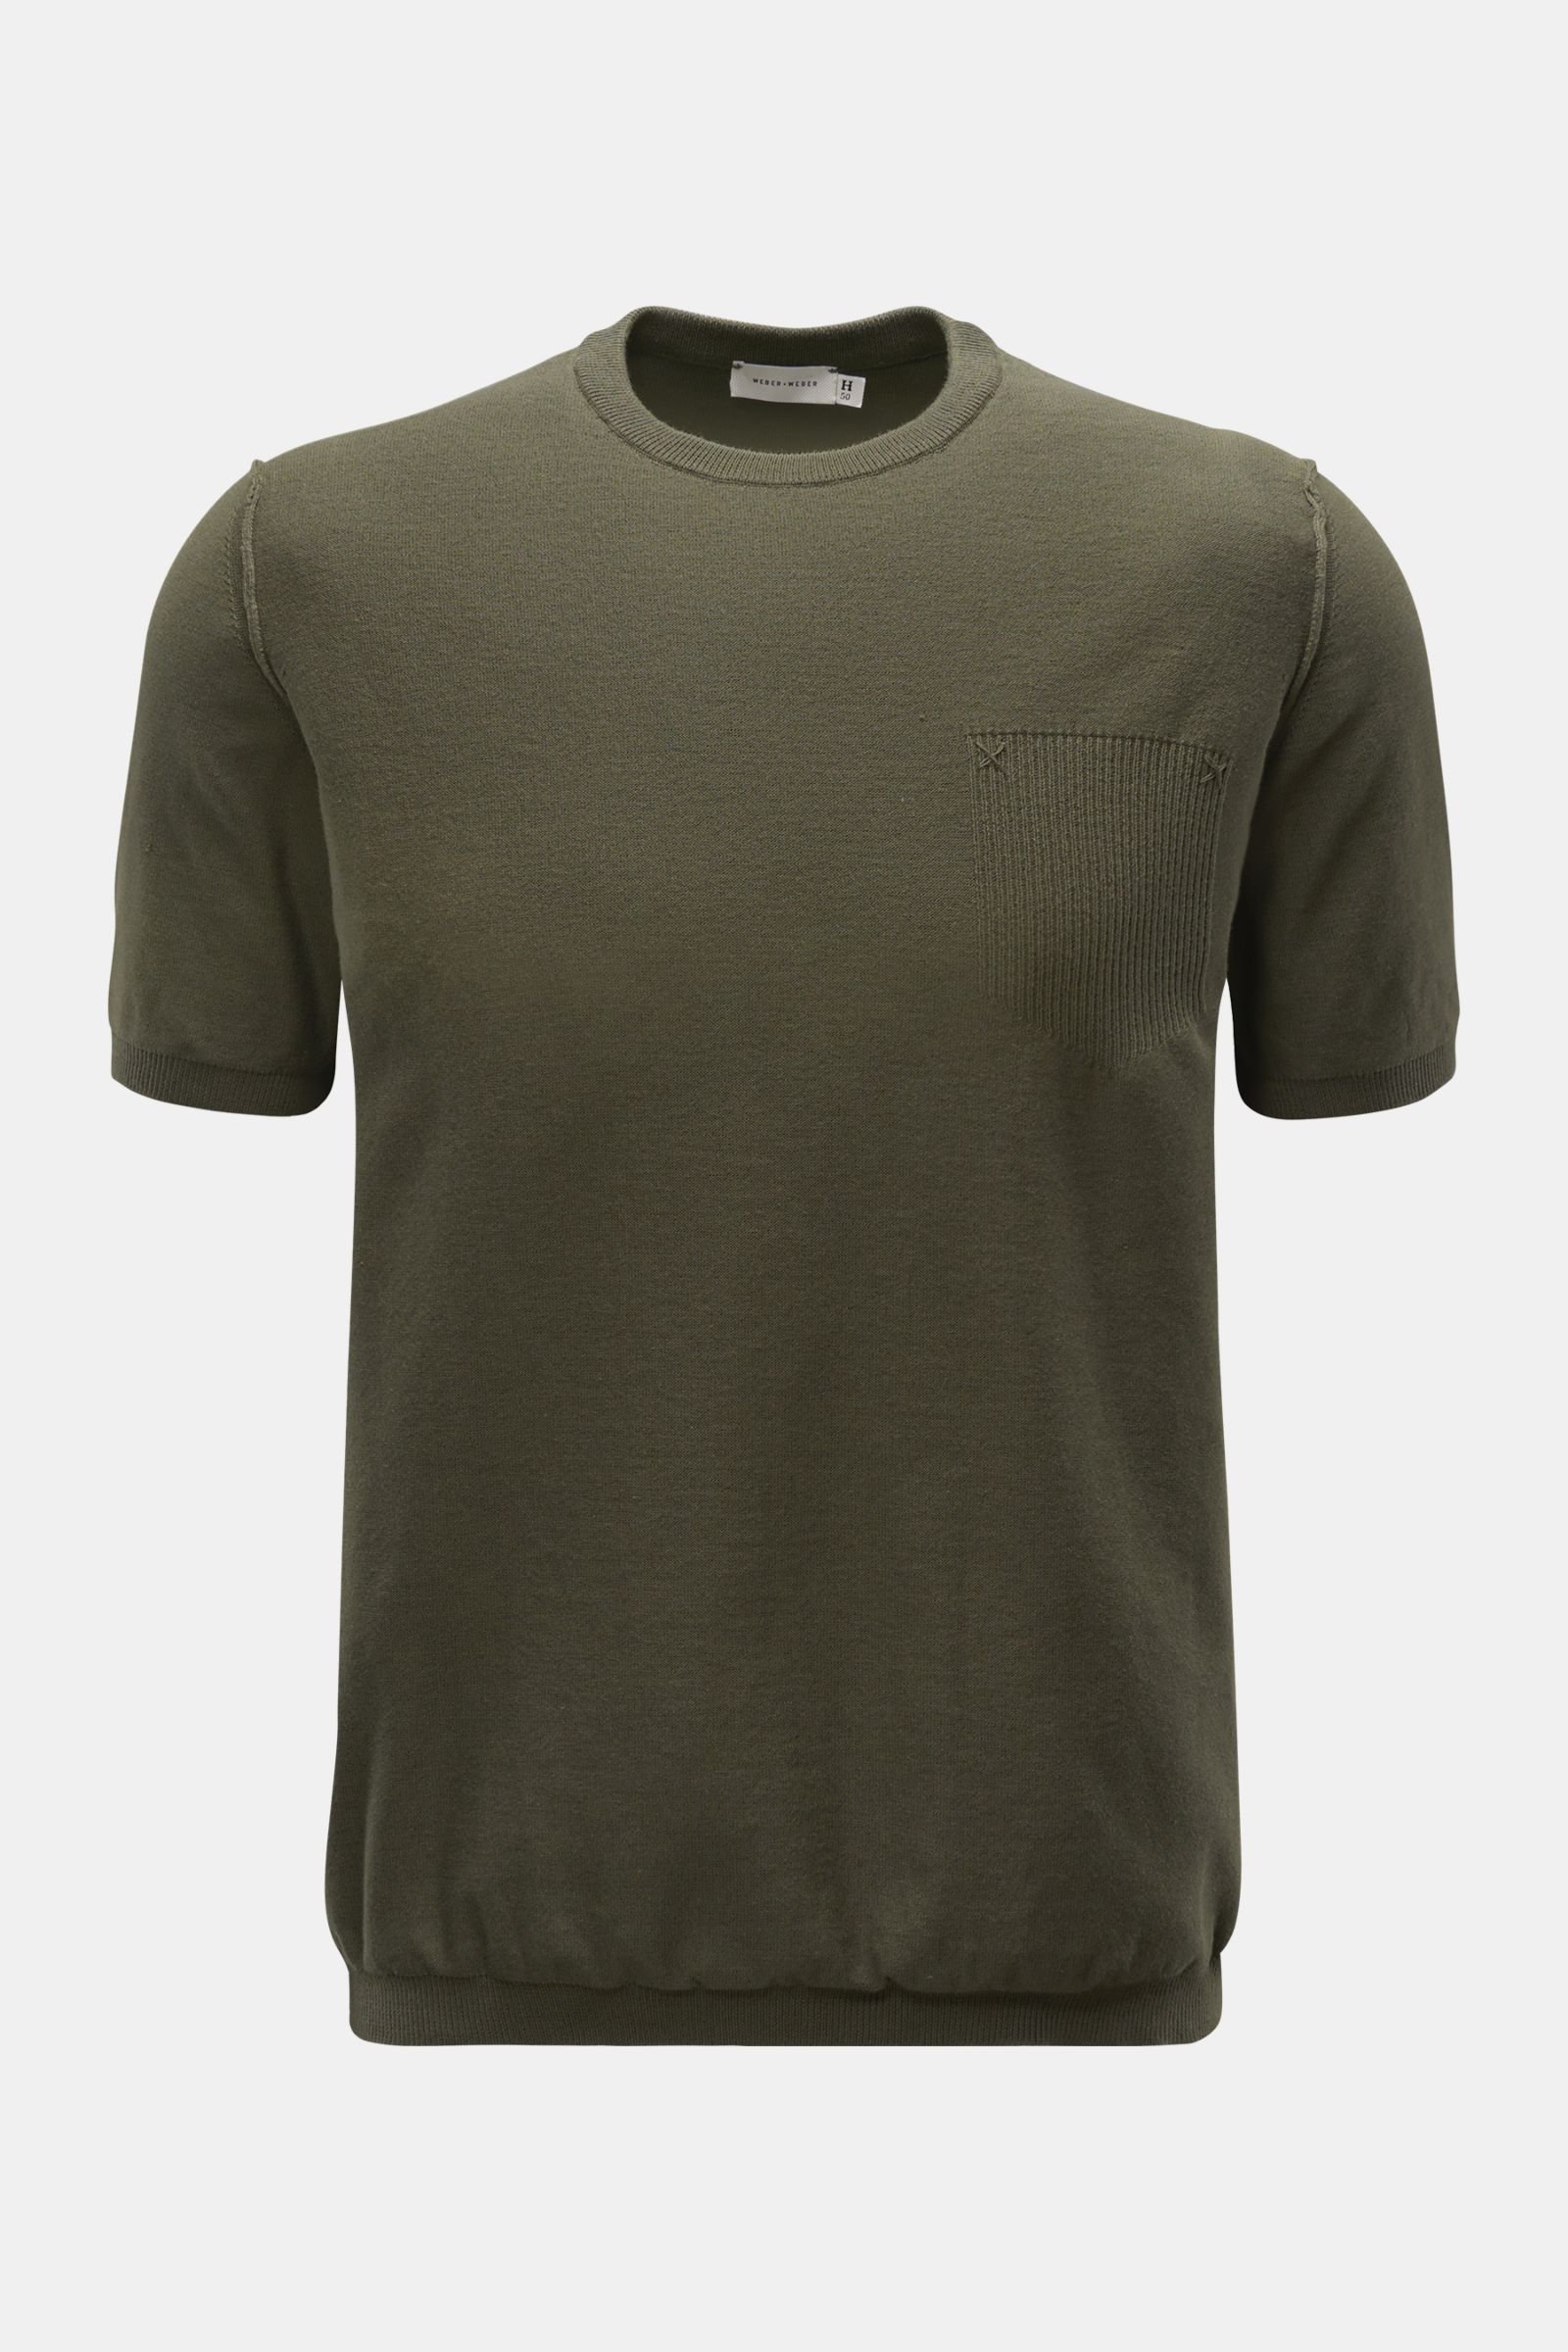 WEBER + WEBER short sleeve crew neck jumper 'Cotton Knit T-Shirt' olive